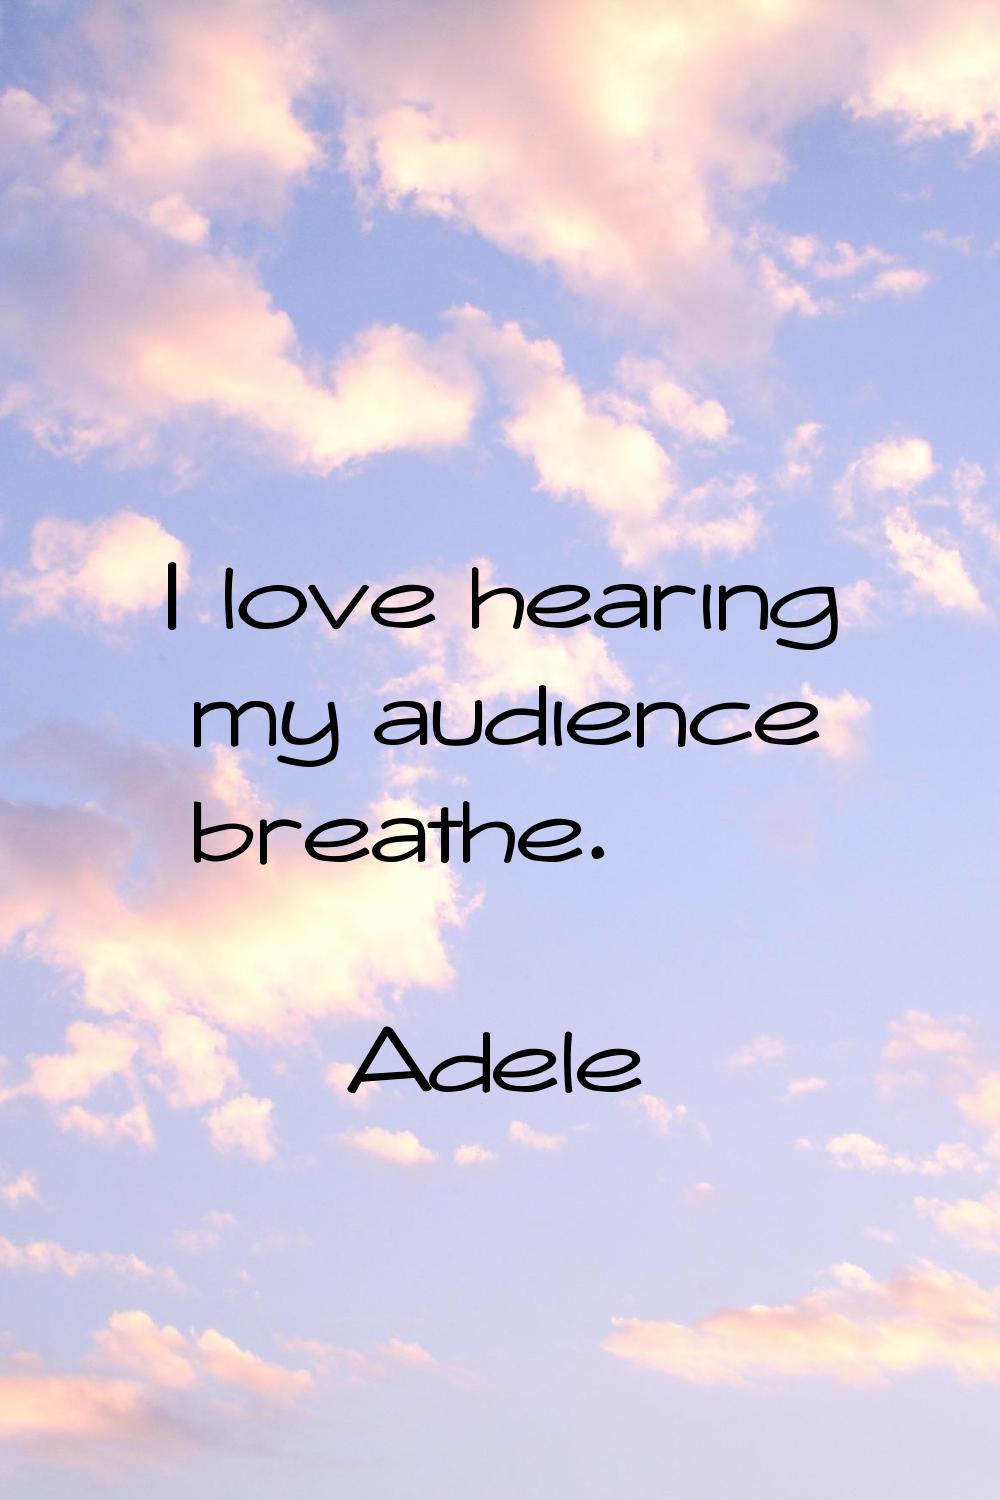 I love hearing my audience breathe.